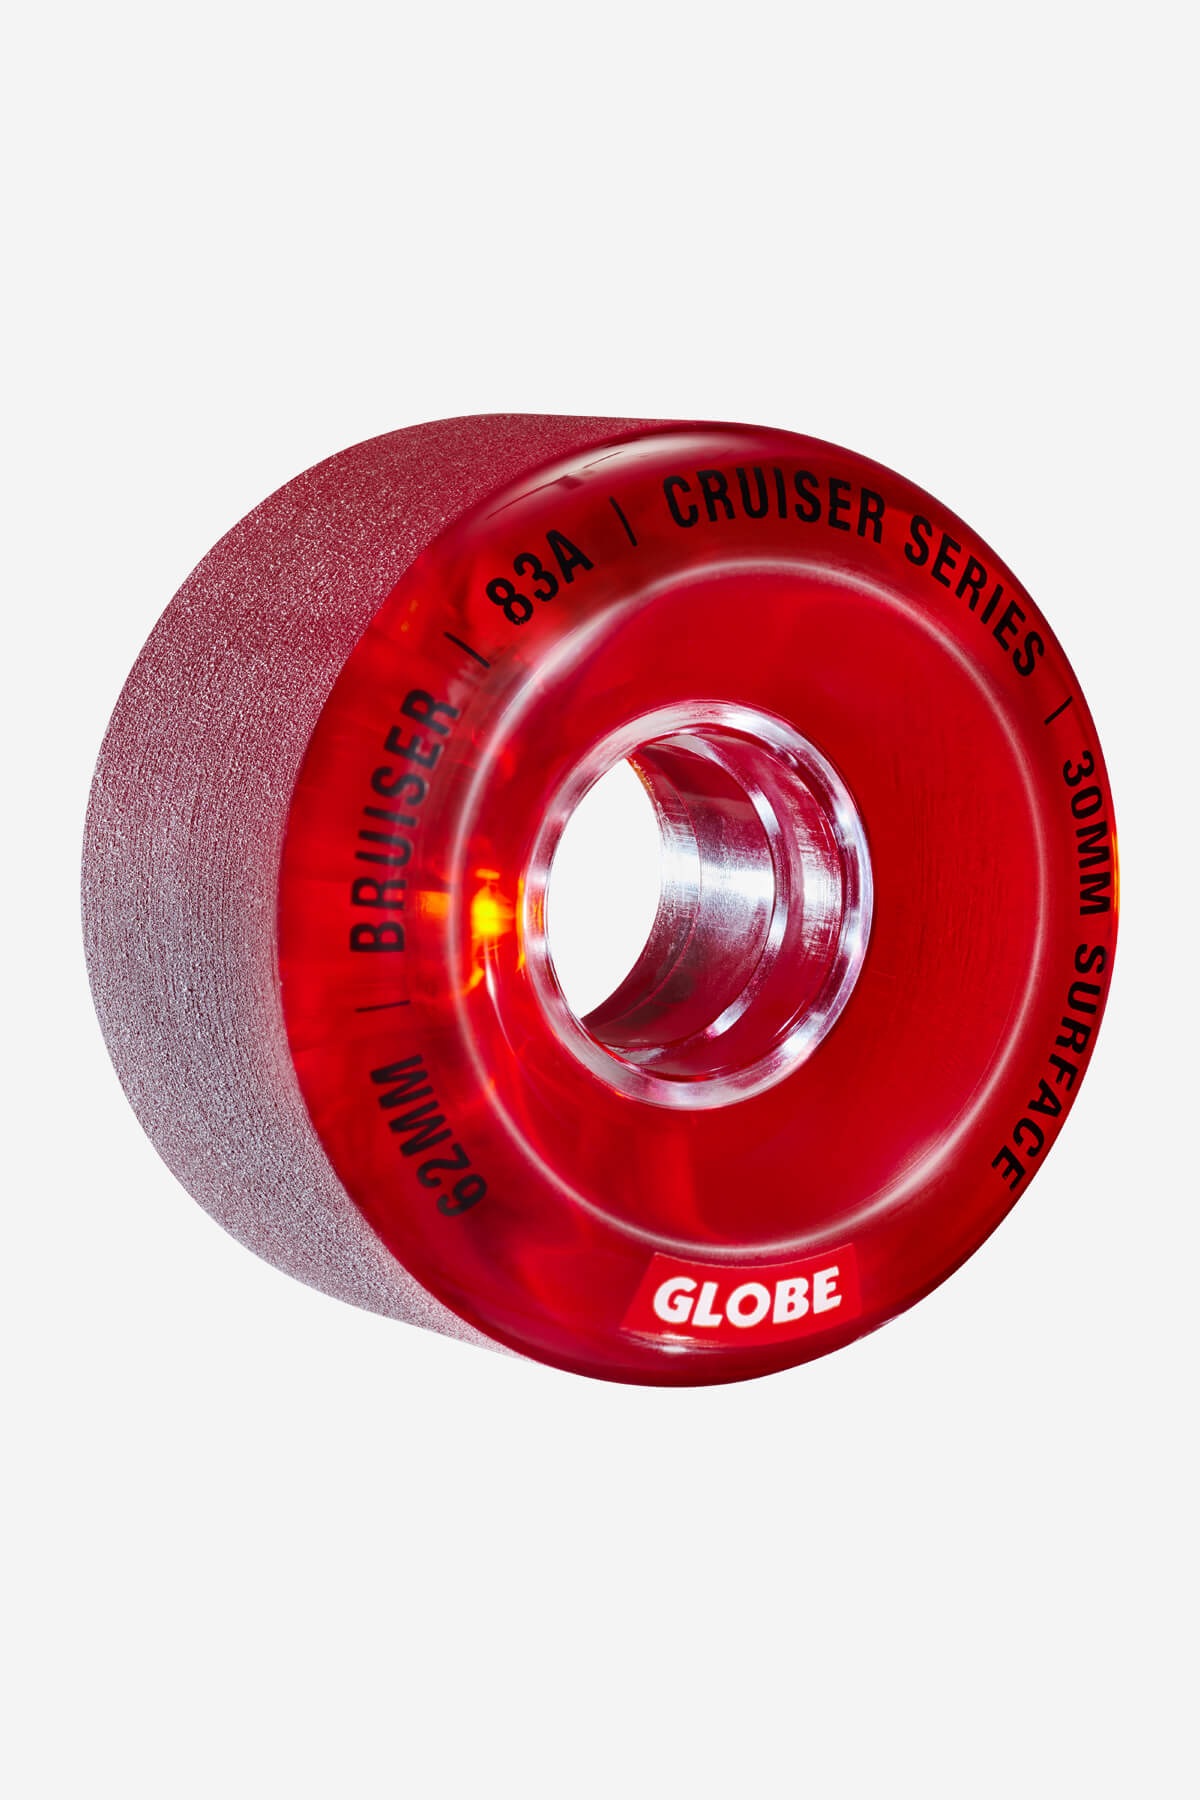 Globe Rollen Bruiser Cruiser Skateboard  Wheel  62mm in Clear Red